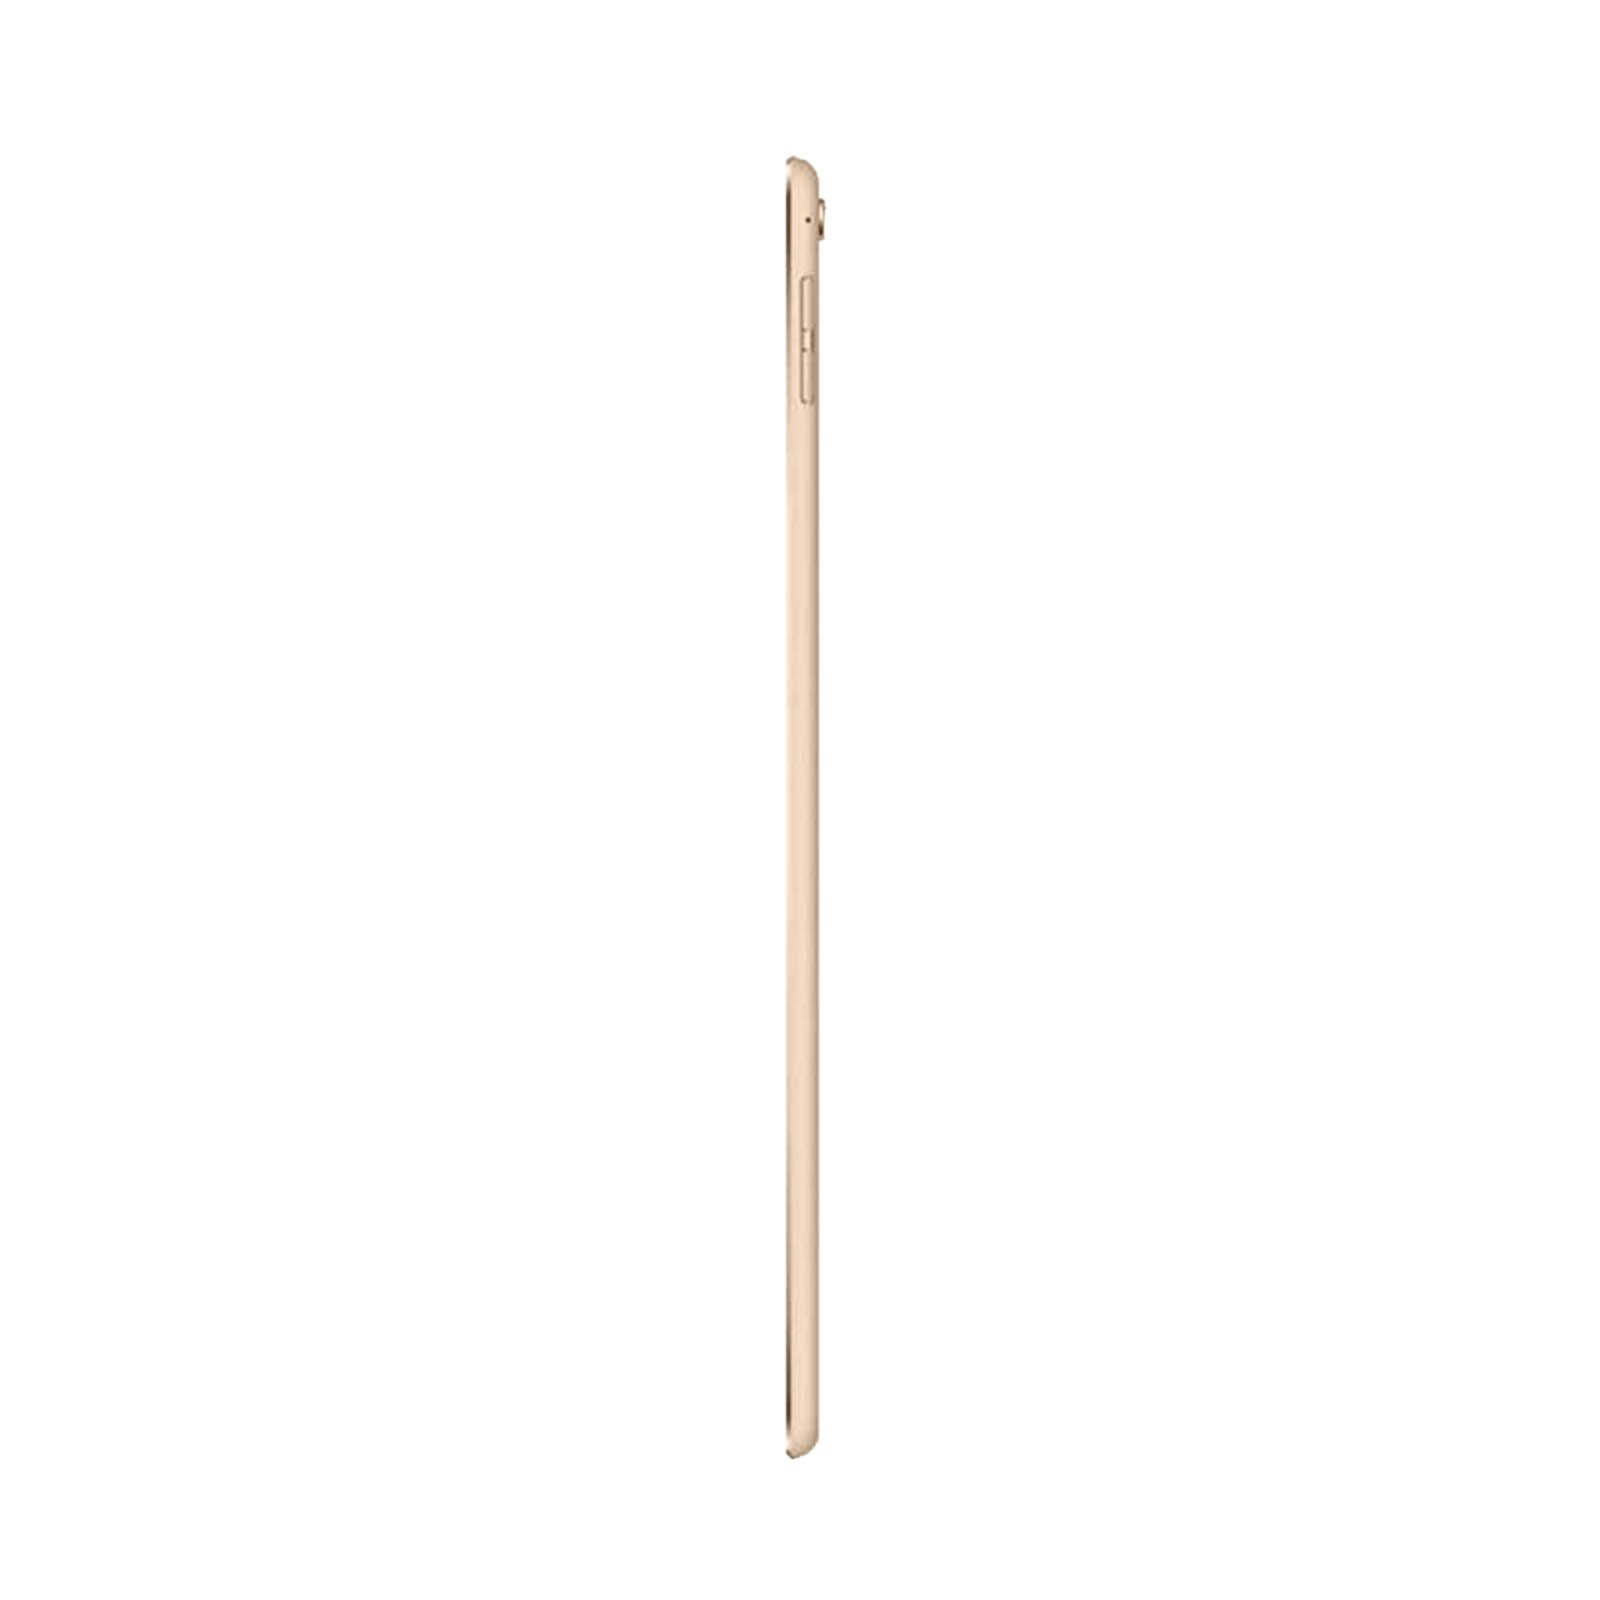 iPad Pro 9.7 Inch 32GB Gold Very Good - Unlocked